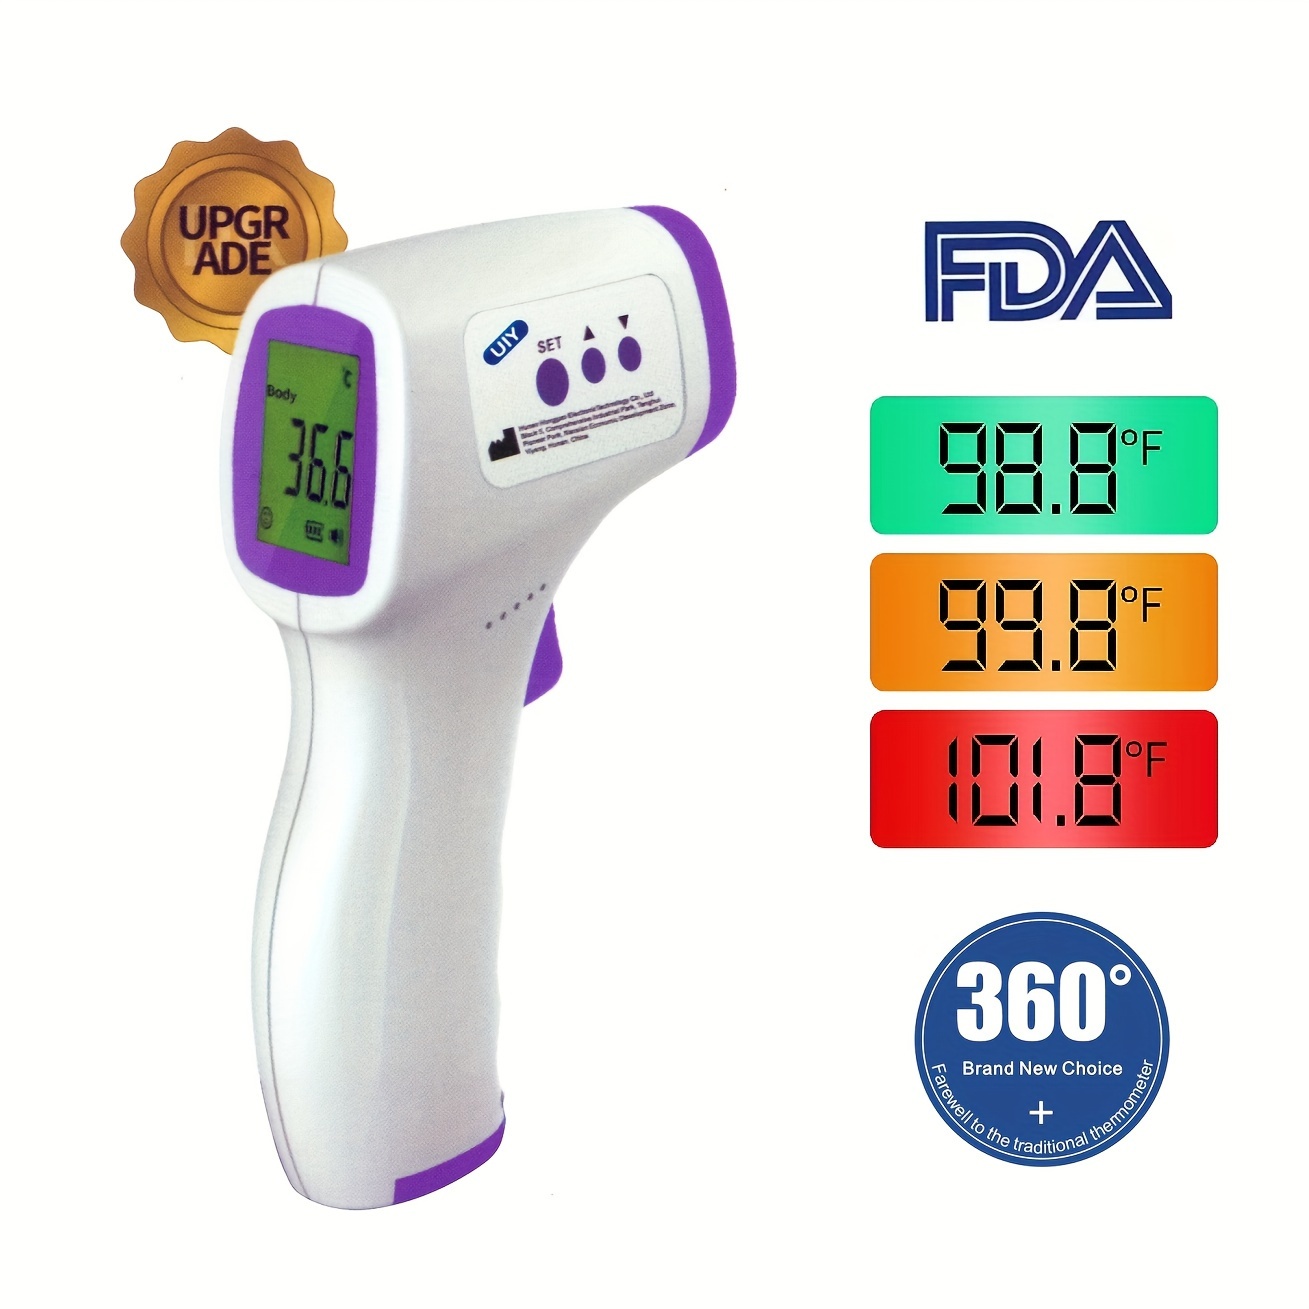 AiQURA Non-Contact Infrared Thermometer